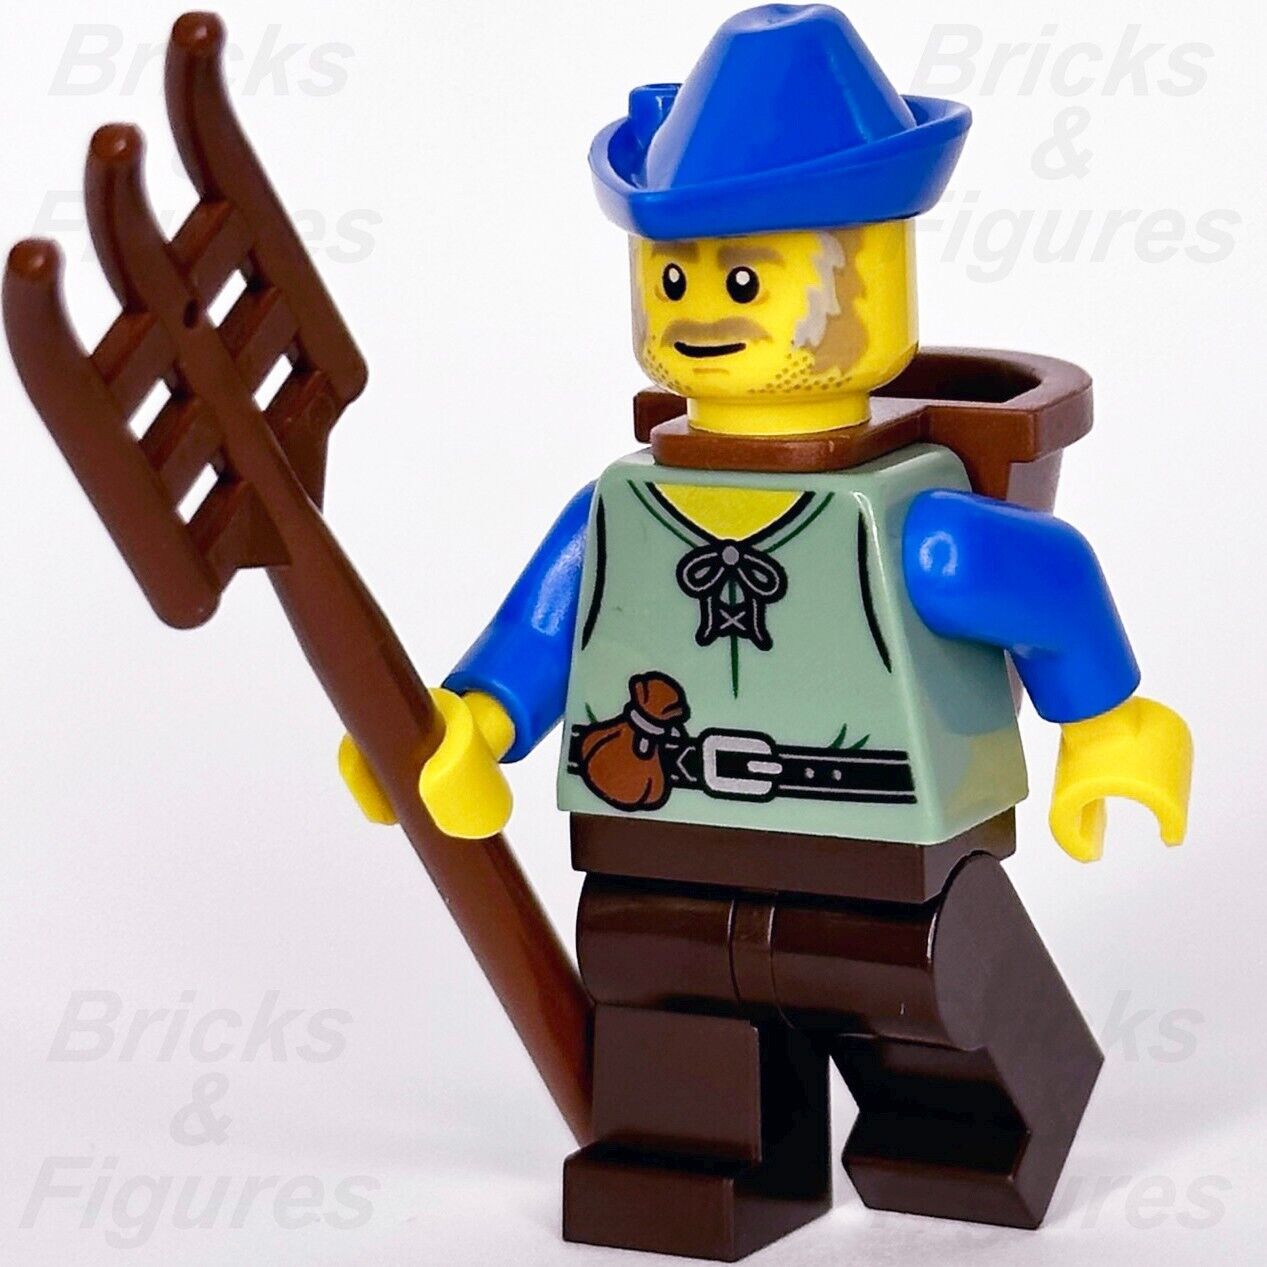 LEGO Lion Knights Peasant Farmer Castle Minifigure with Rake 10305 cas579 New - Bricks & Figures